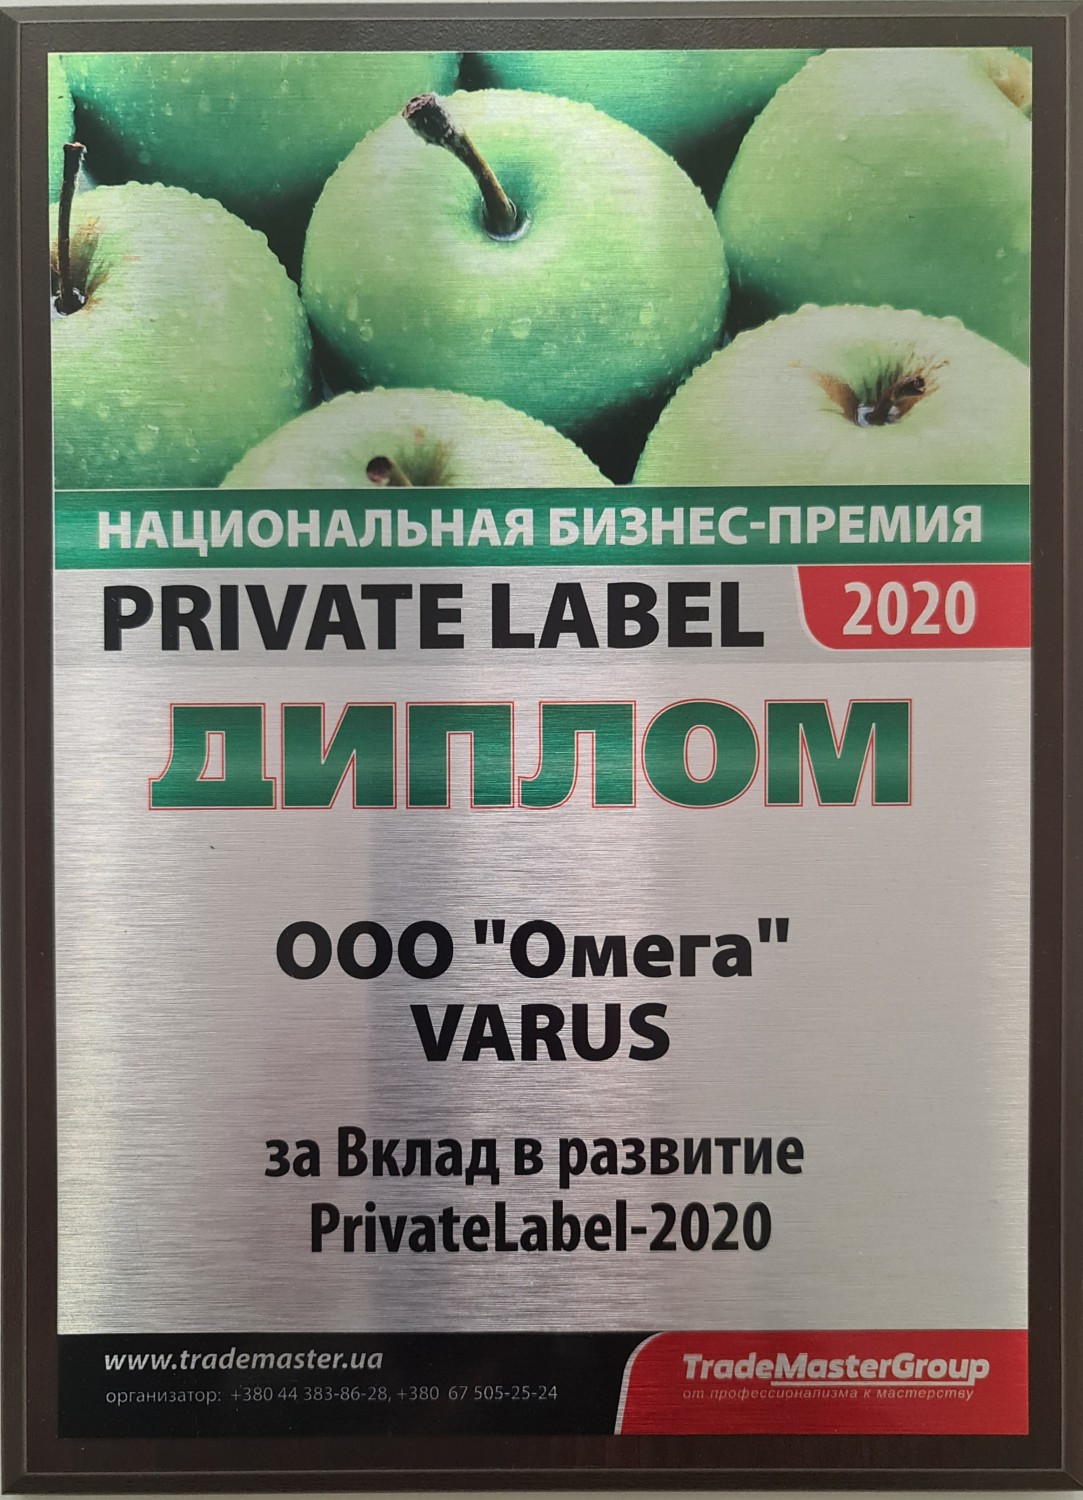 VARUS ОТРИМАВ НАГОРОДУ PRIVATELABEL 2020